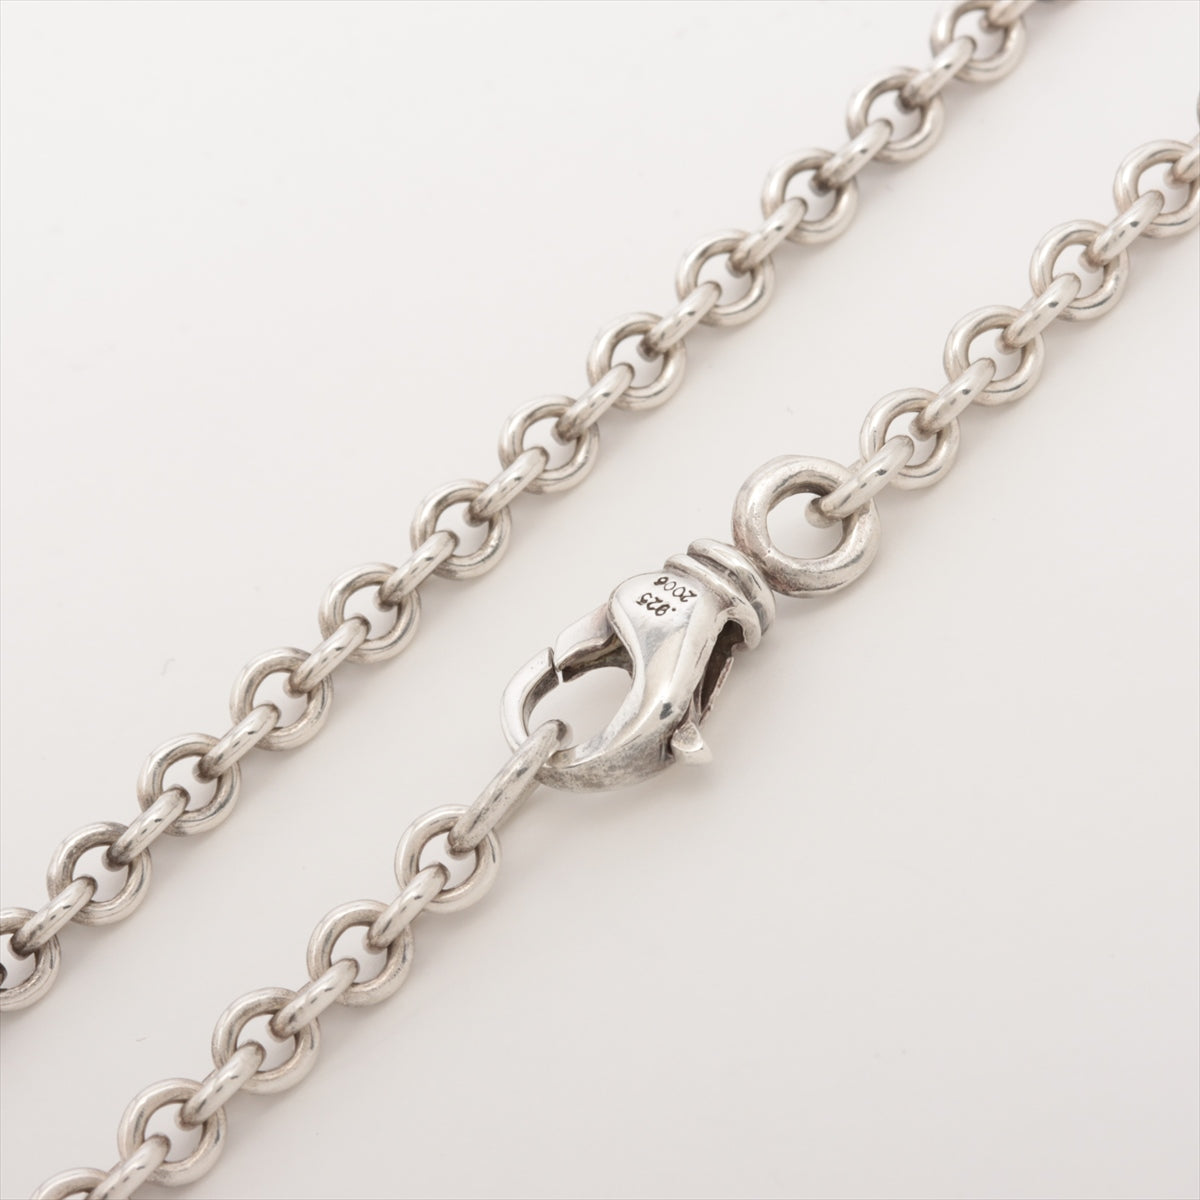 Chrome Hearts NE chain 18 inches Necklace 925 20.8g